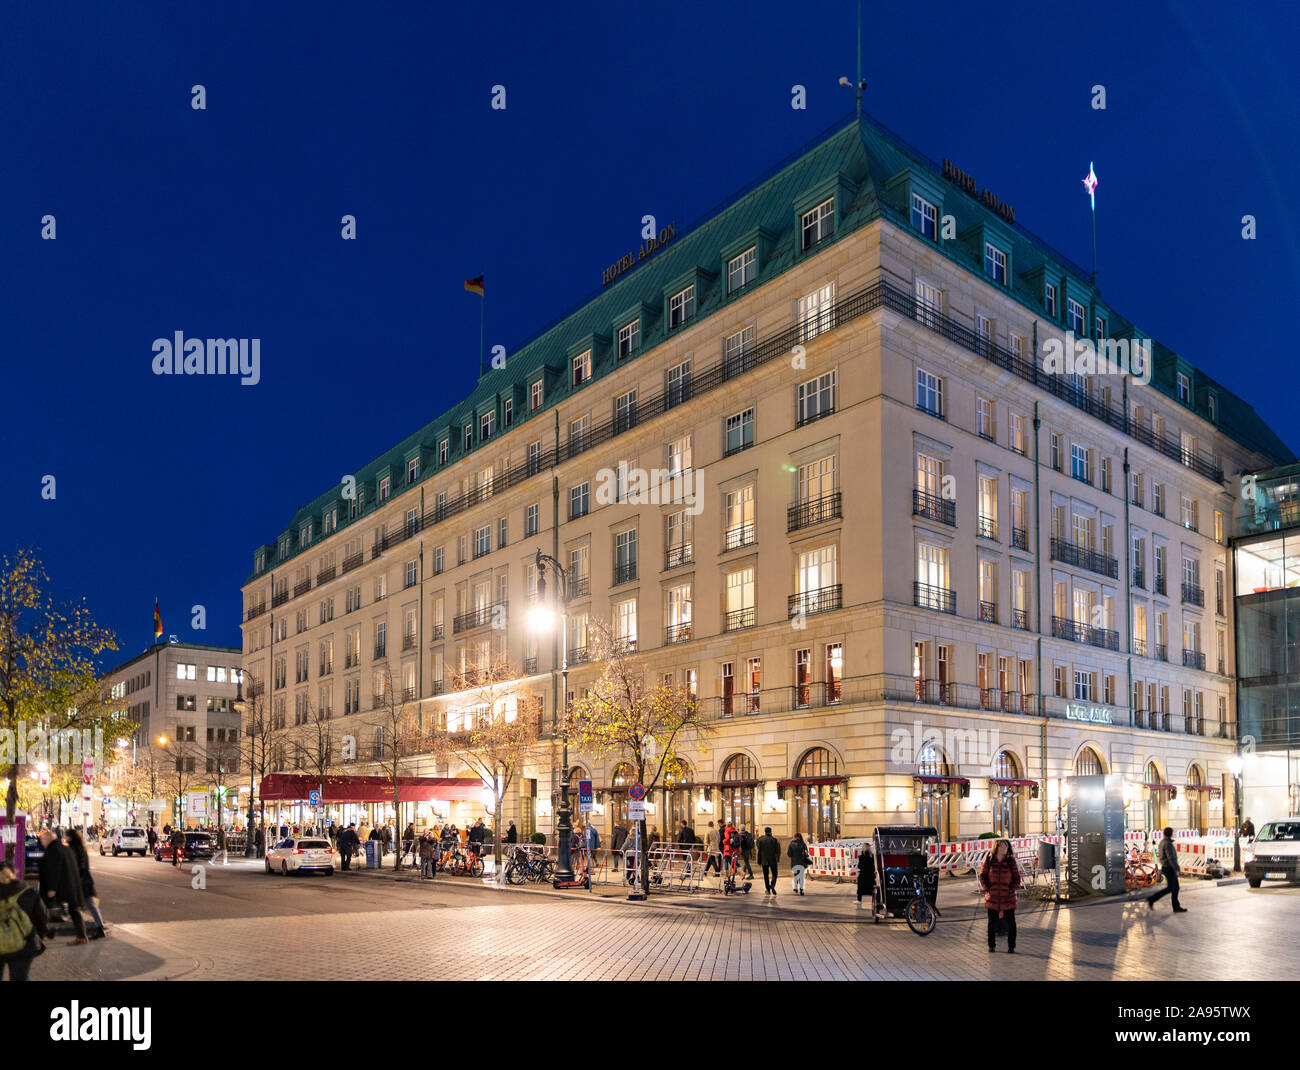 Night view of Adlon Hotel at Pariser Platz in Berlin, Germany Stock Photo